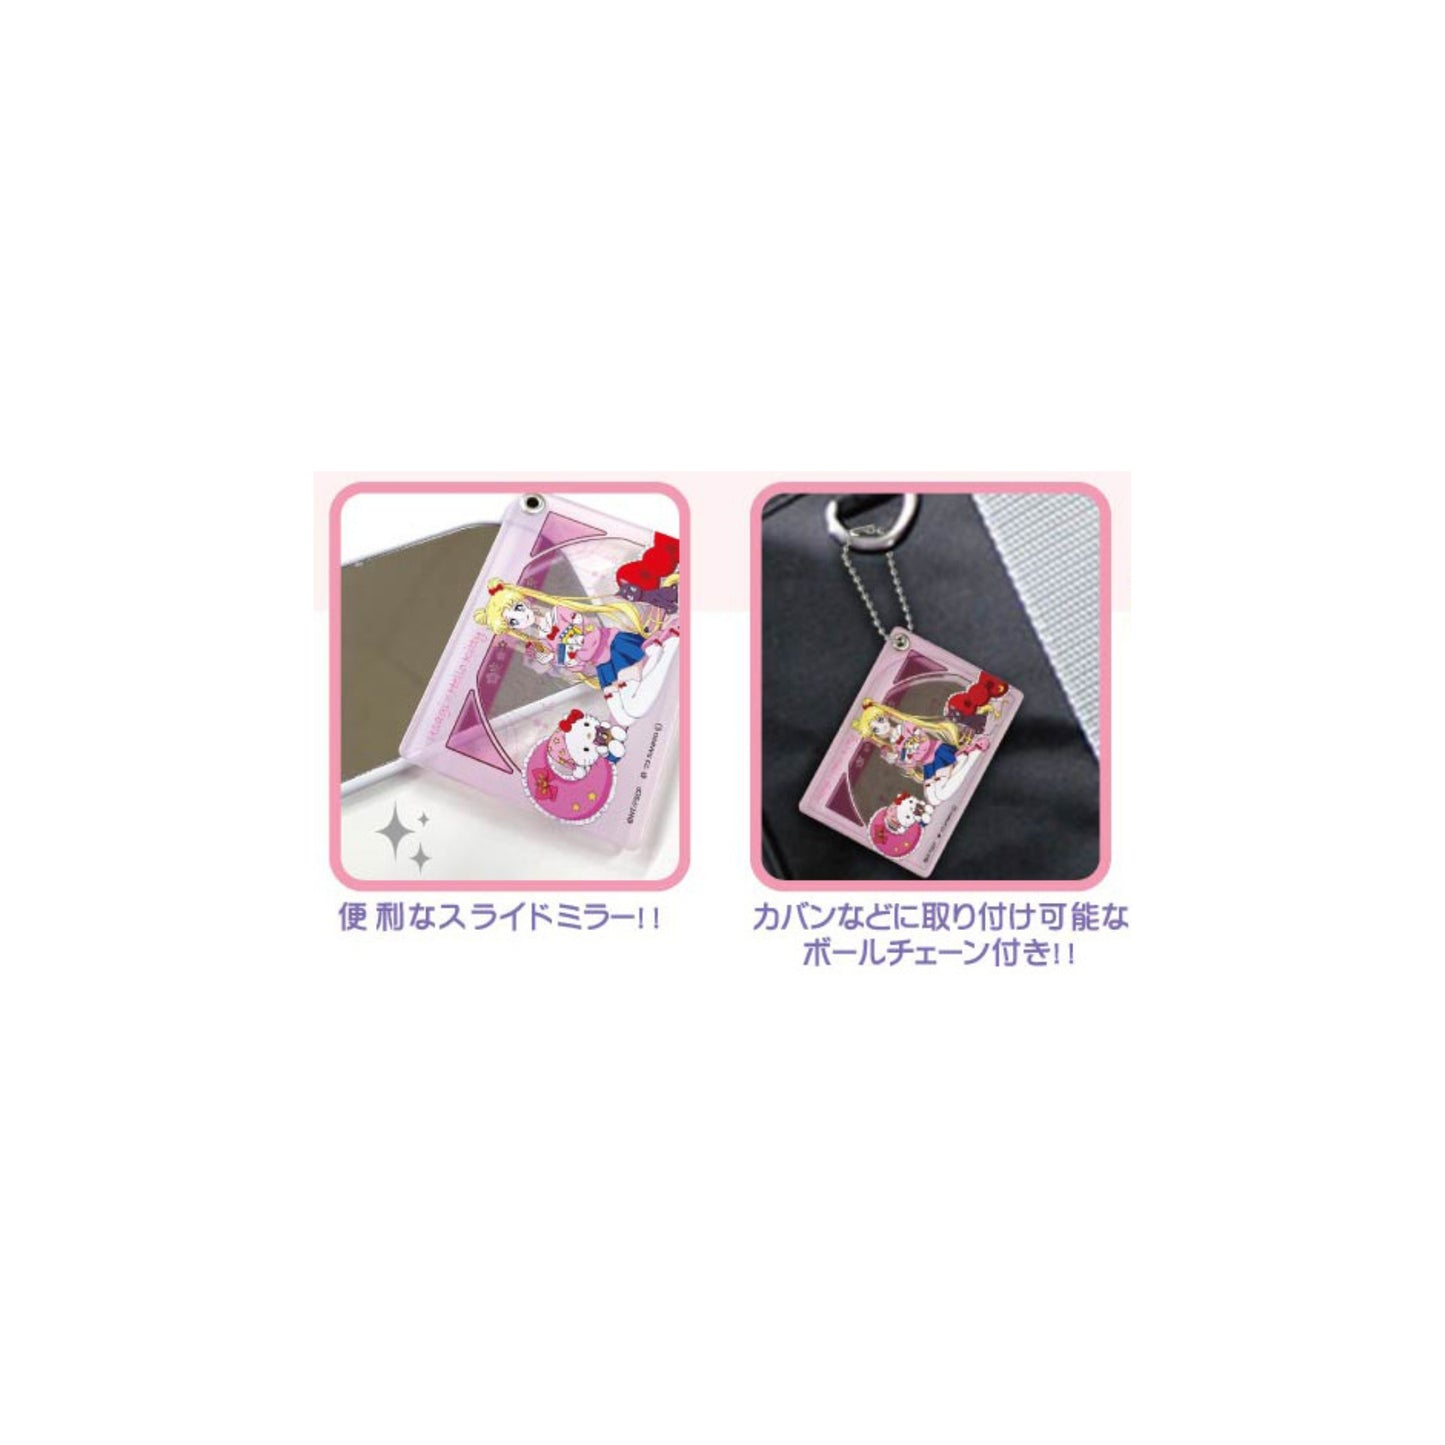 Sailor Moon x Sanrio Characters - Slide Mirror: Makoto x Marroncream